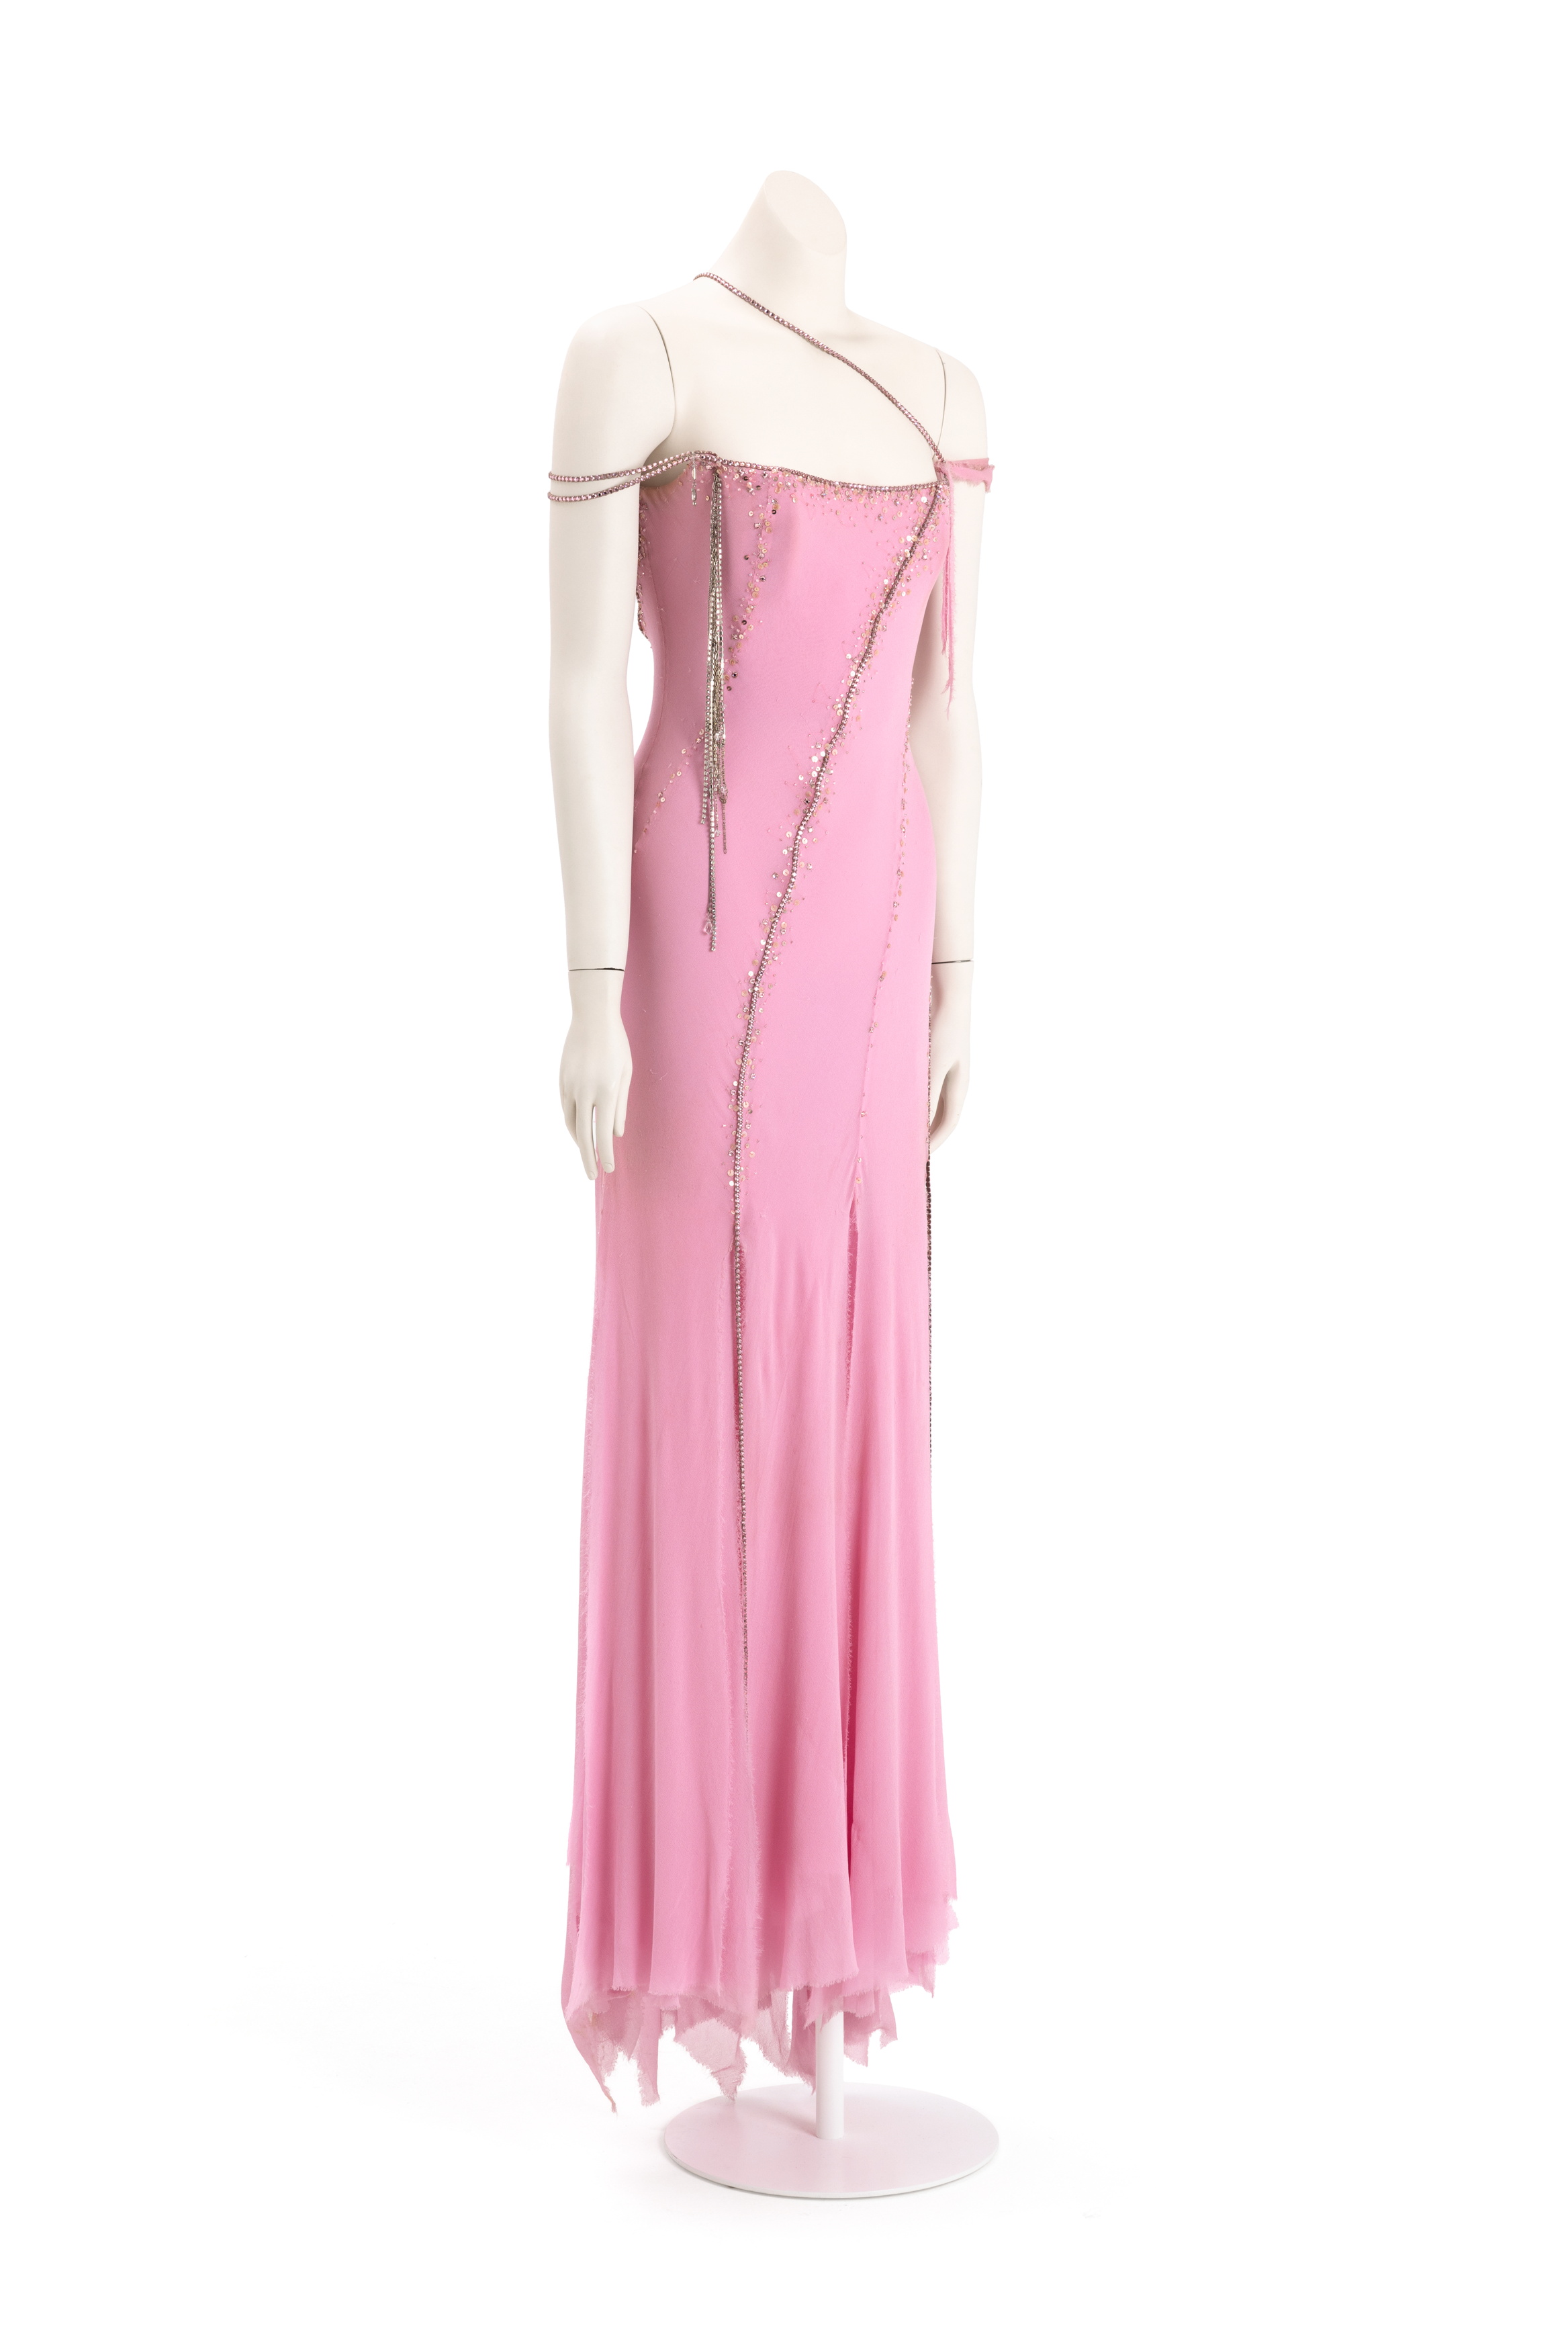 Evening dress designed by Lisa Ho and worn by Delta Goodrem